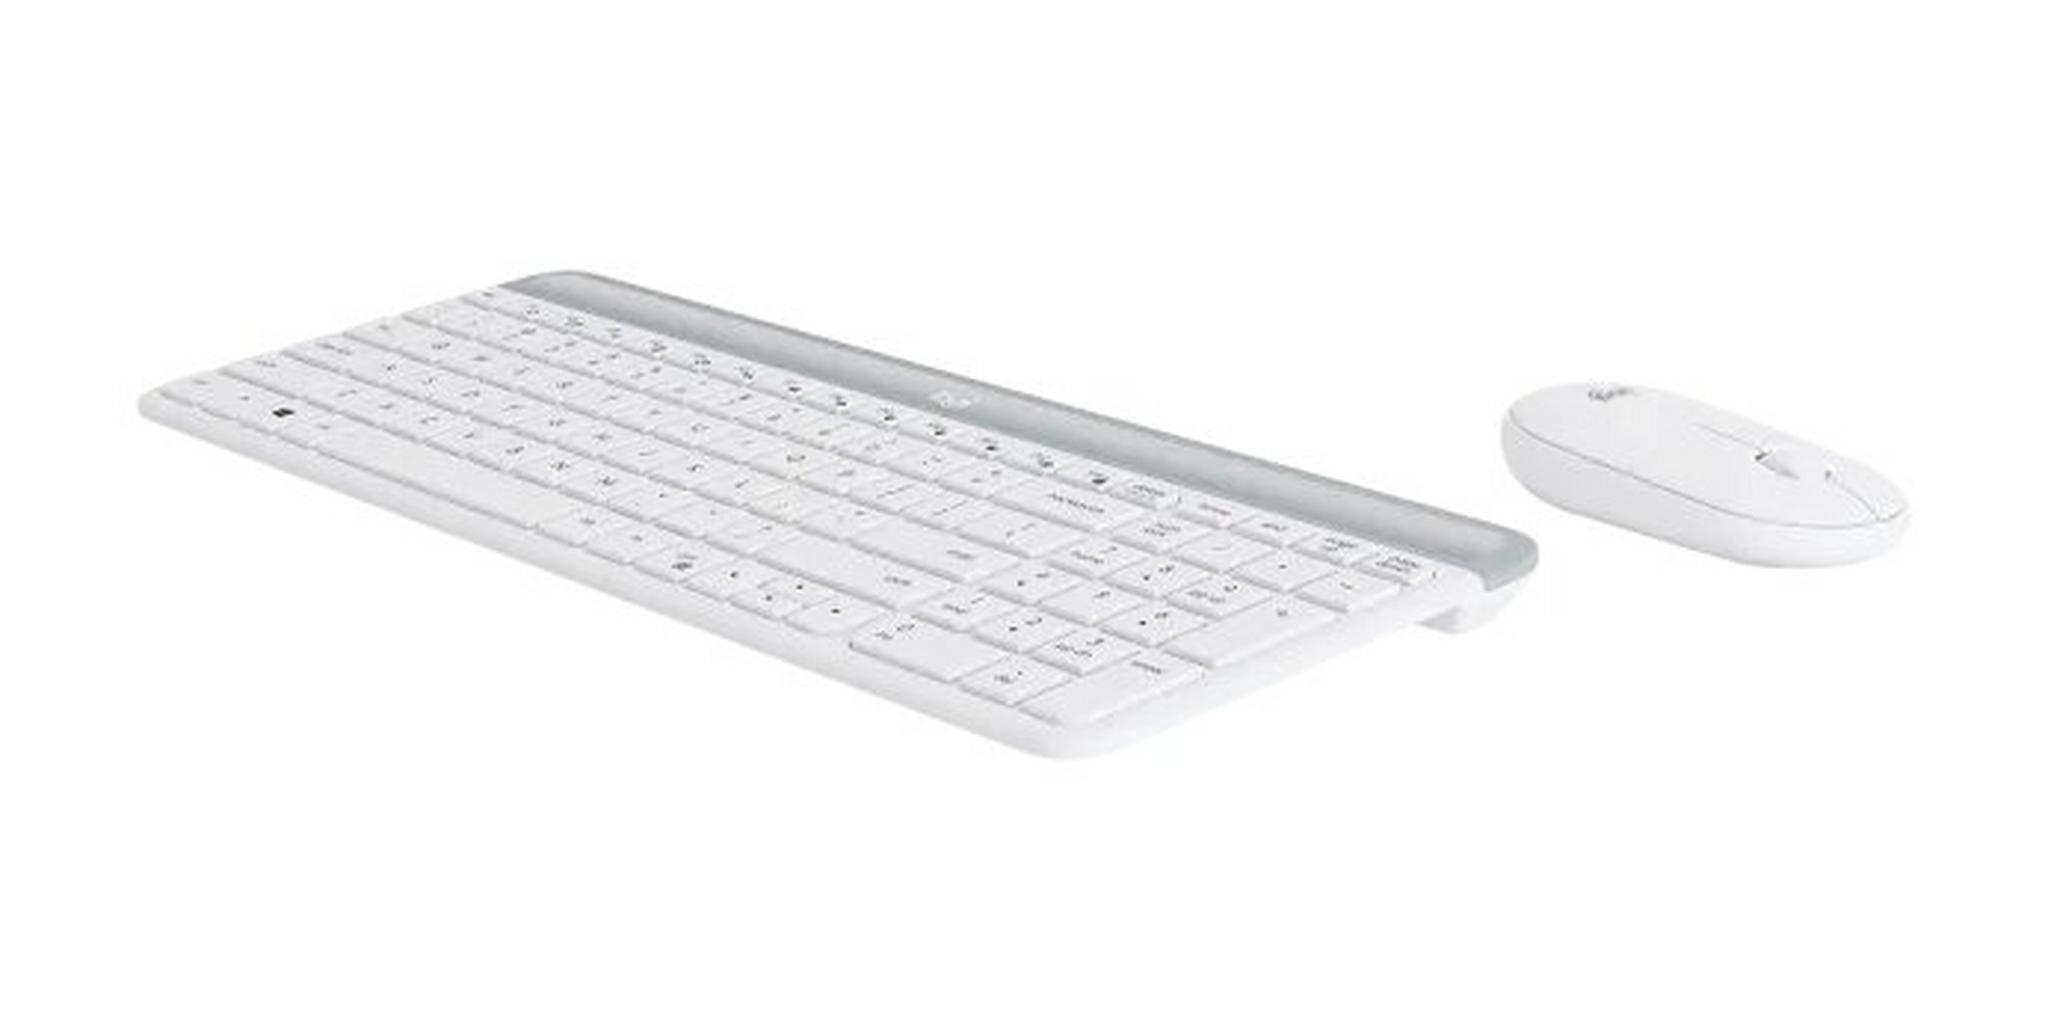 Logitech M750 Slim Keyboard & Mouse Combo - Off-White